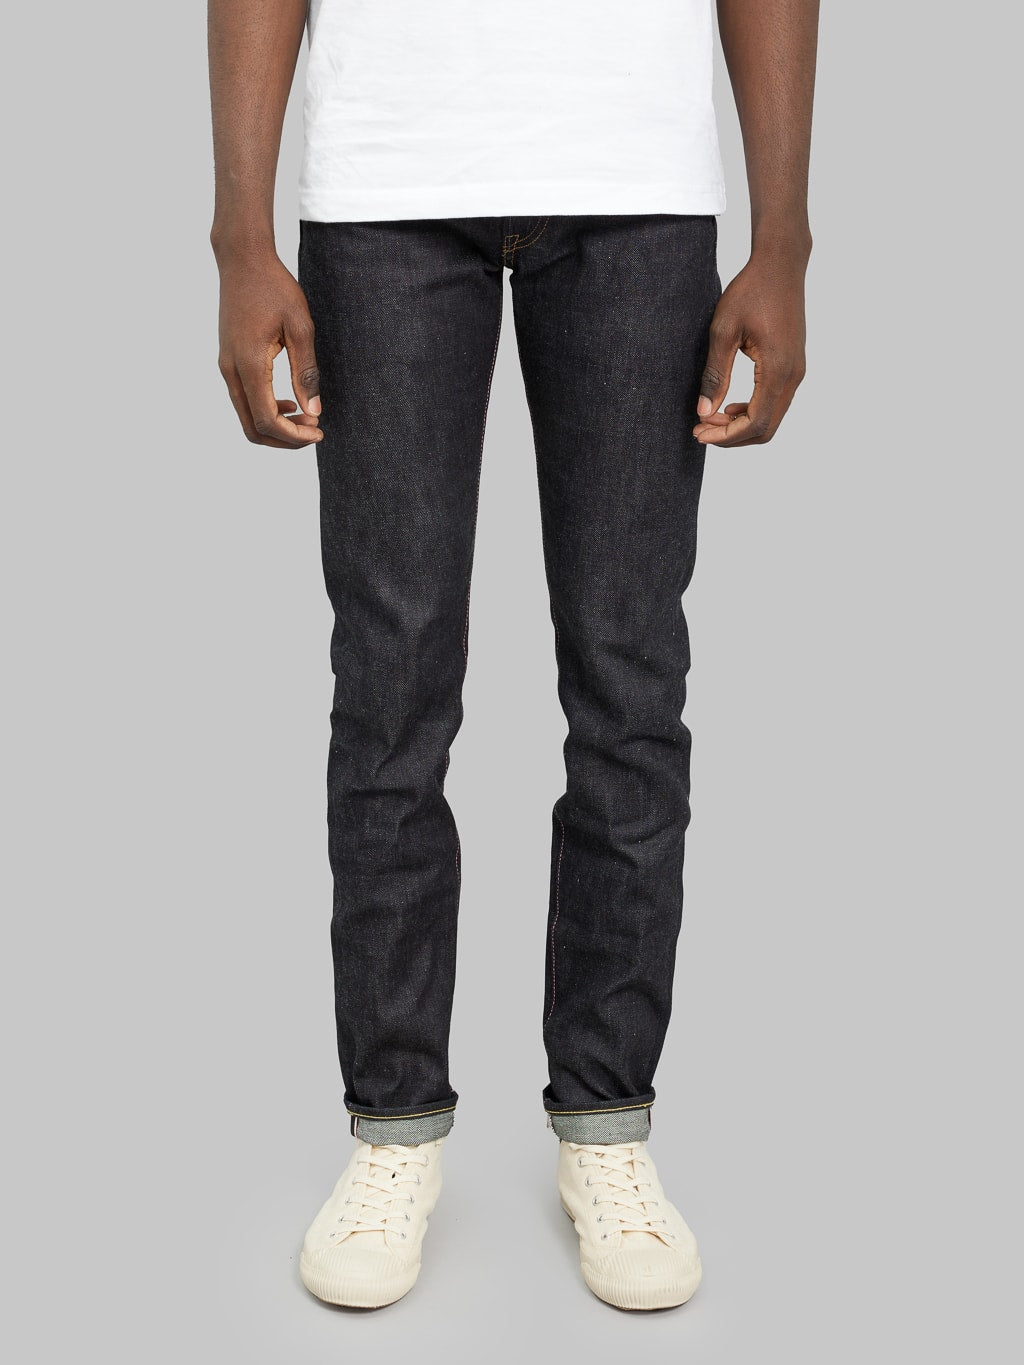 momotaro jeans 0306 12 12oz selvedge denim tight tapered front fit